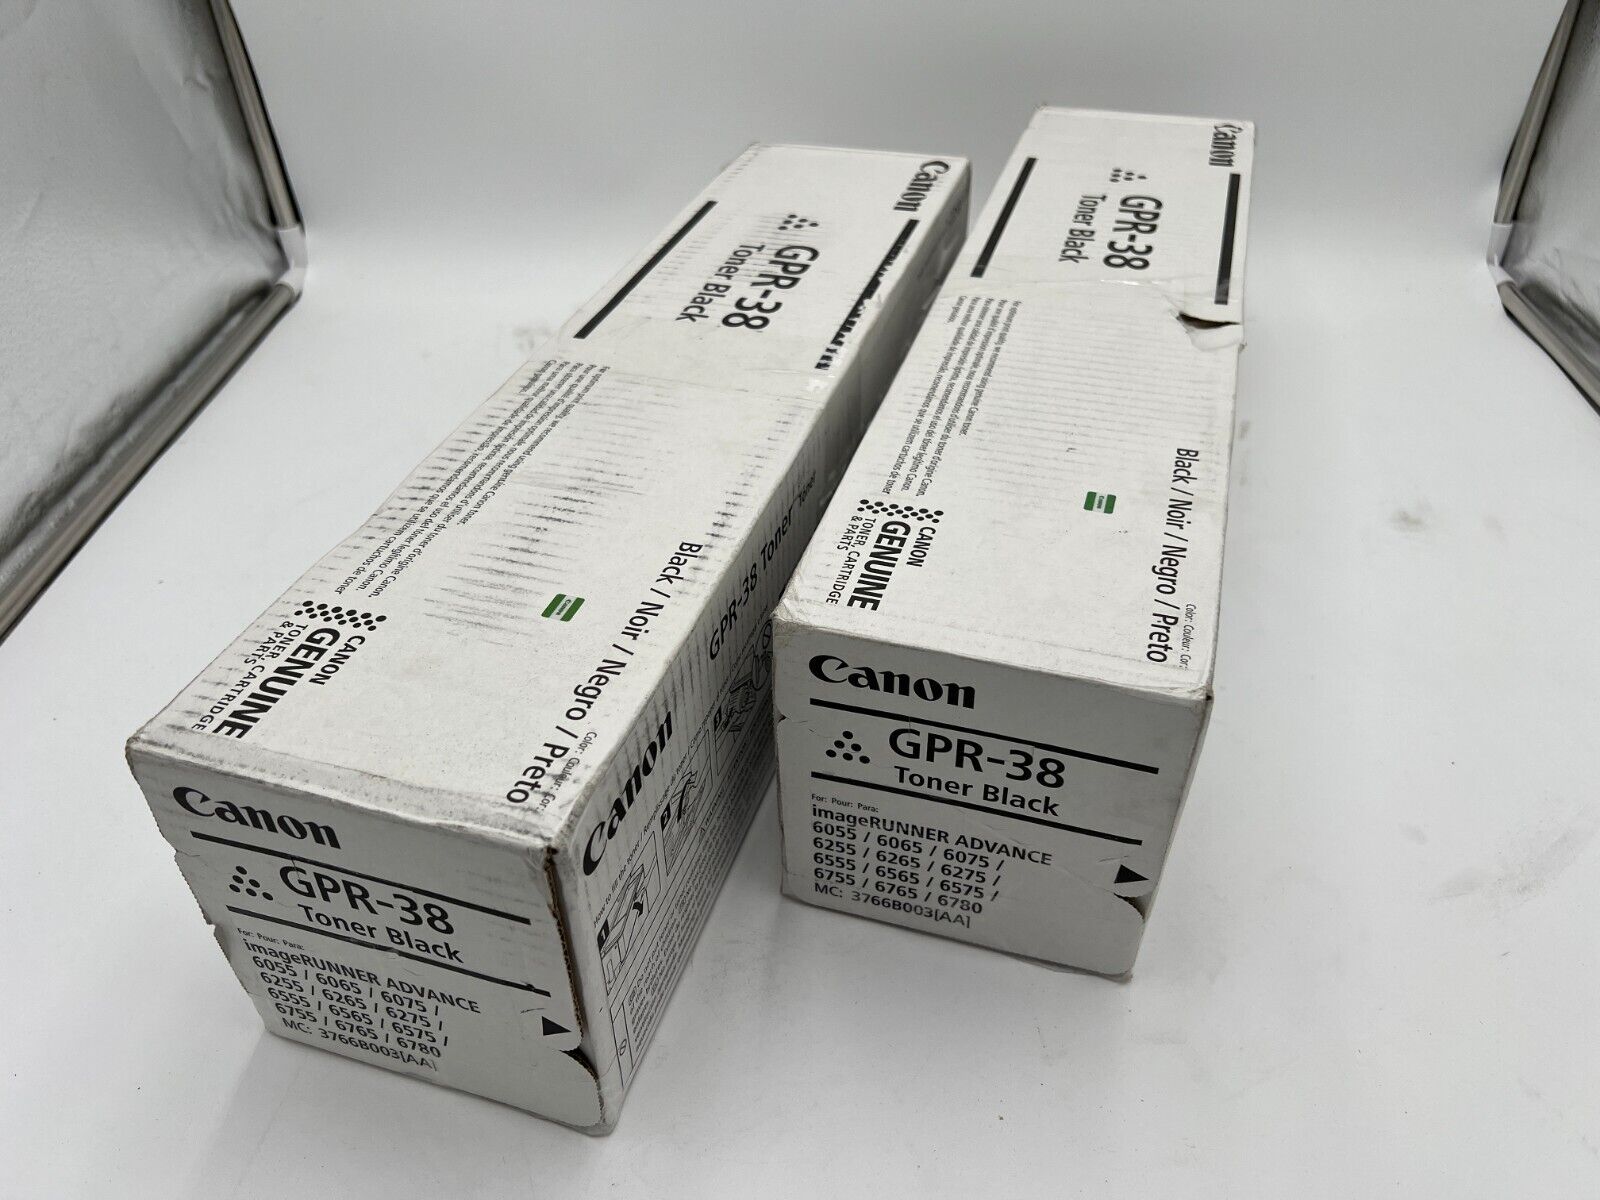 2 Genuine Canon GPR-38 (3766B003) Black Toner Cartridges New Sealed Boxes